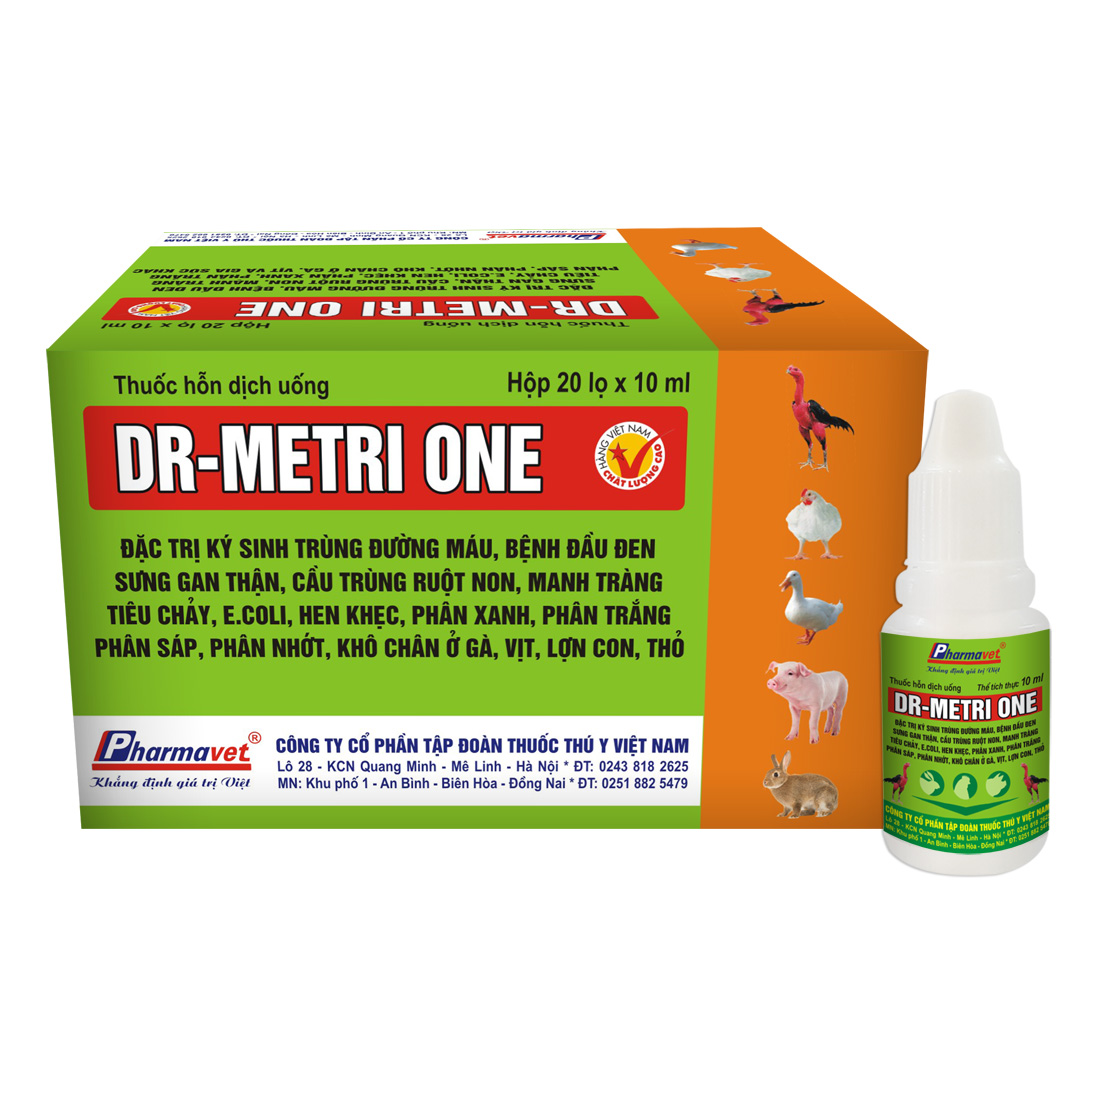 DR-METRI ONE